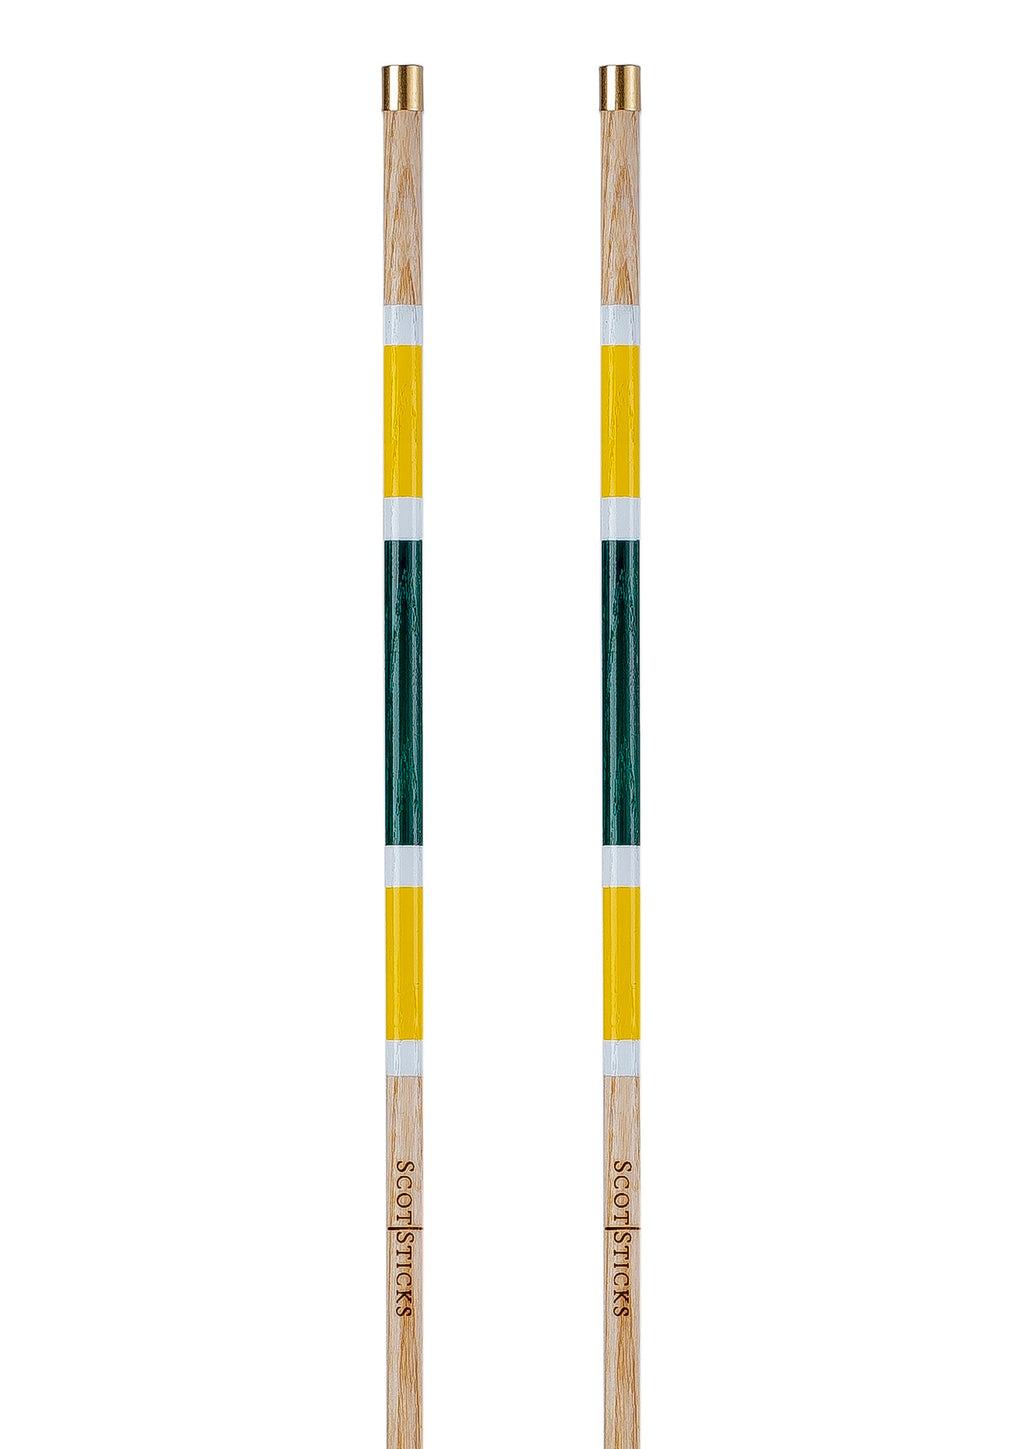 ScotSticks. Bespoke wooden alignment sticks/aids made in Scotland.